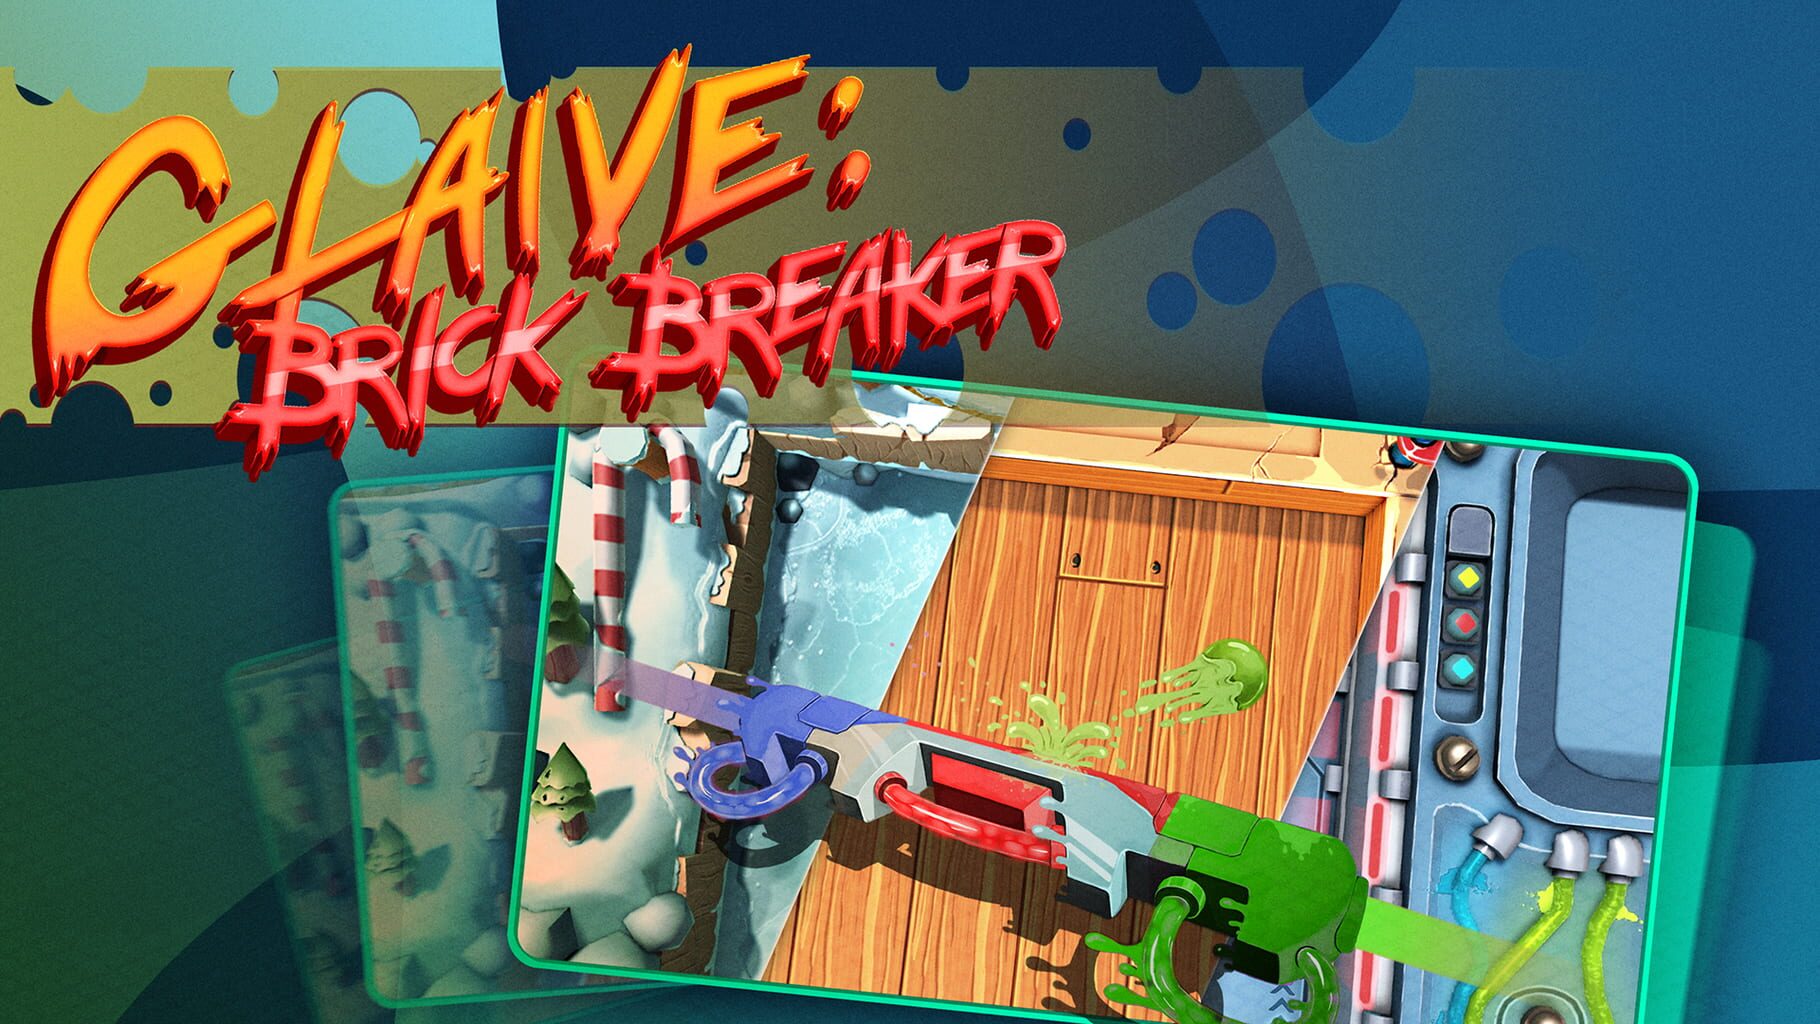 Glaive: Brick Breaker artwork